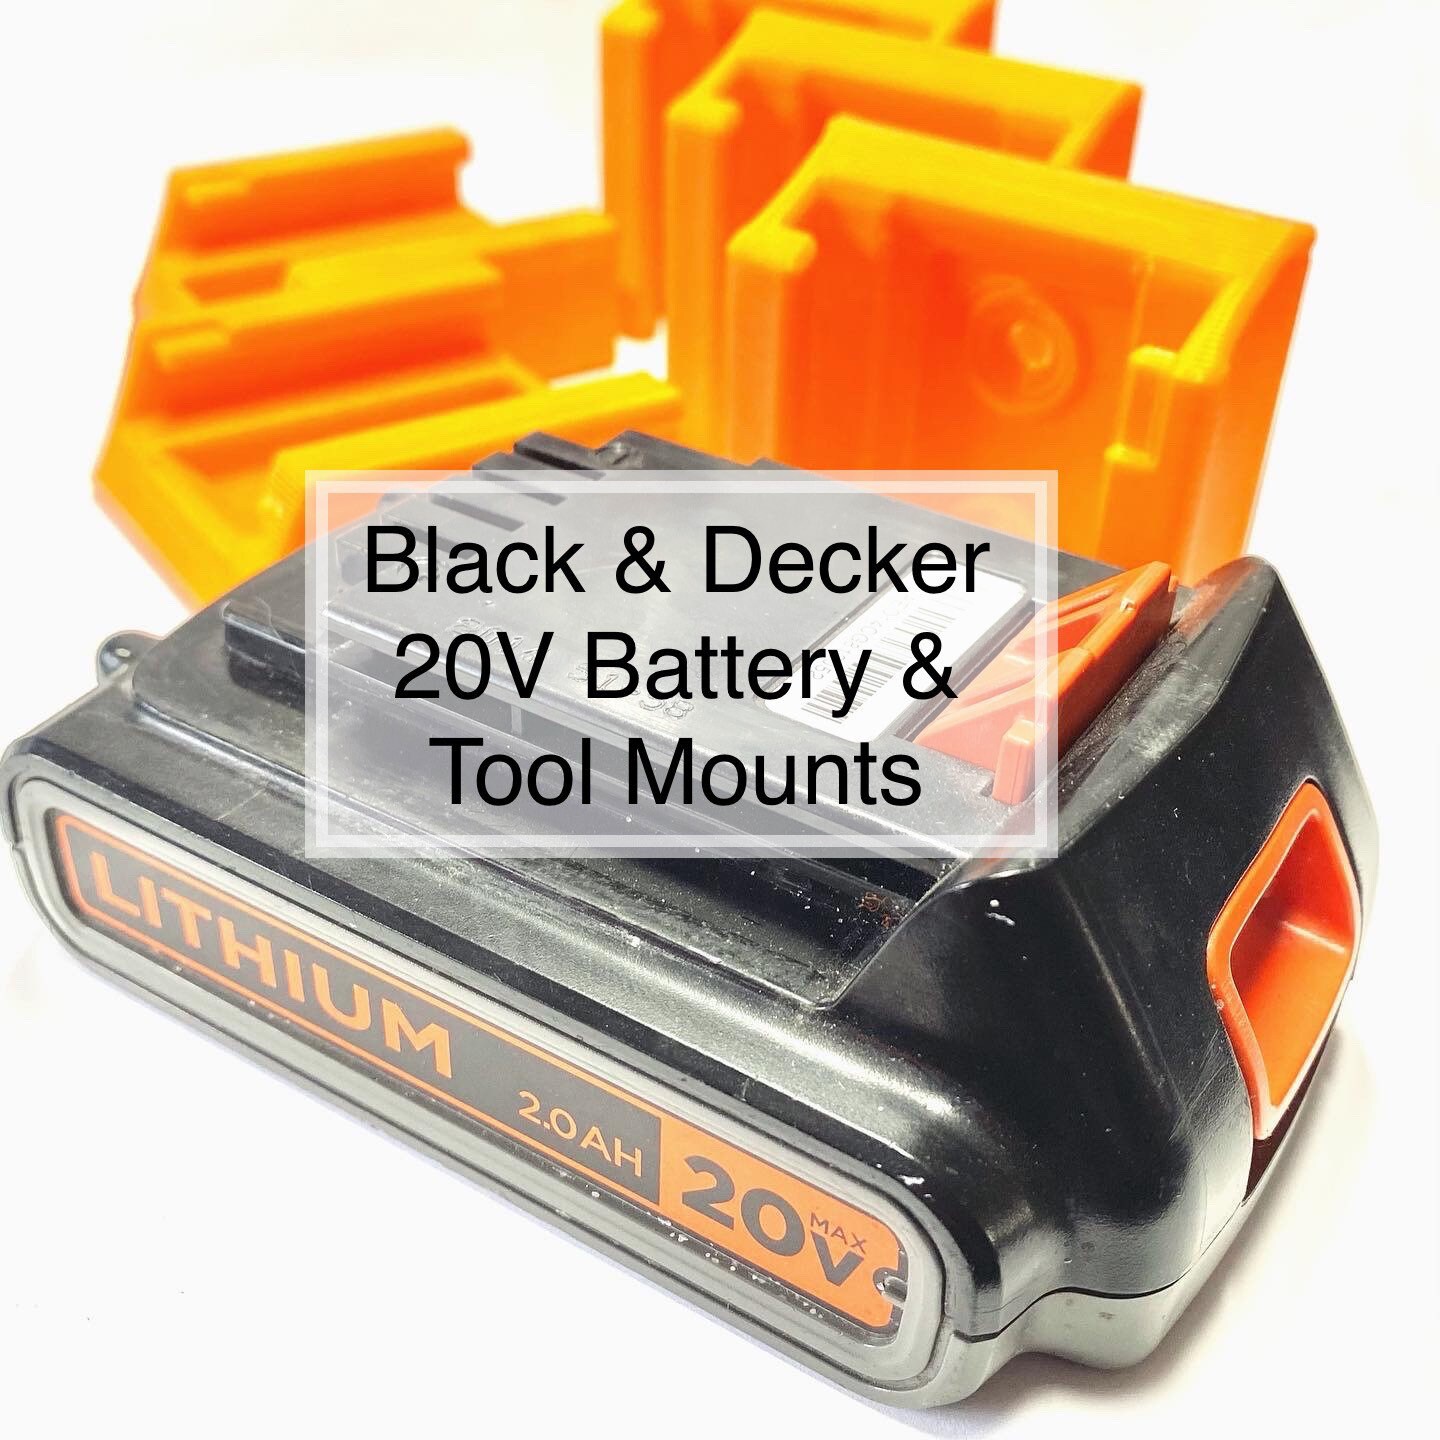 Black & Decker 20V Tool Mount